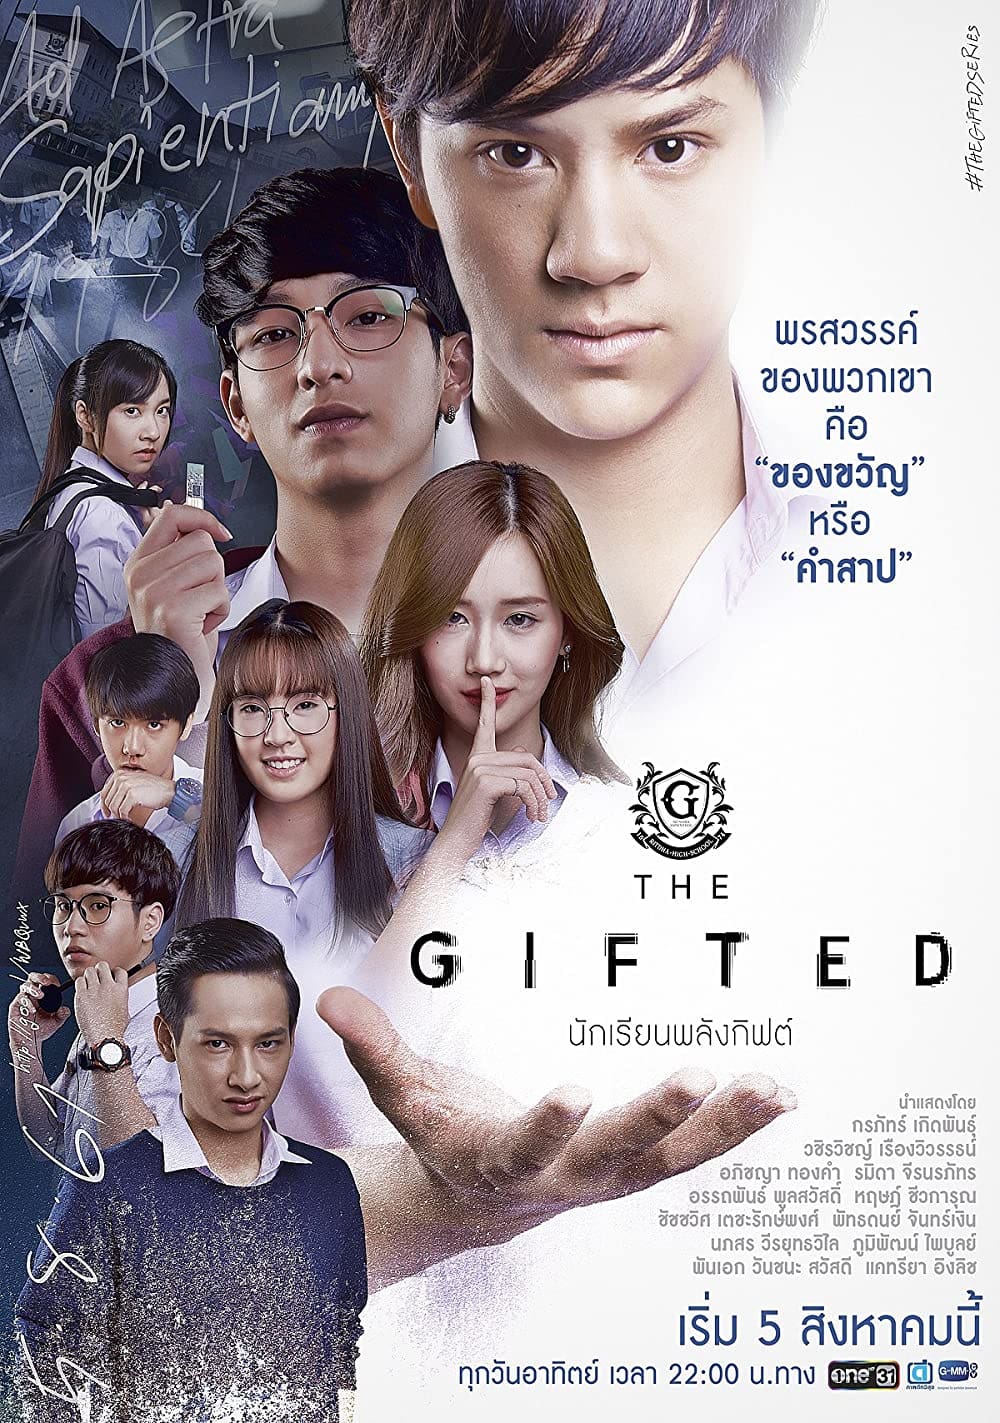 The Gifted : นักเรียนพลังกิฟต์